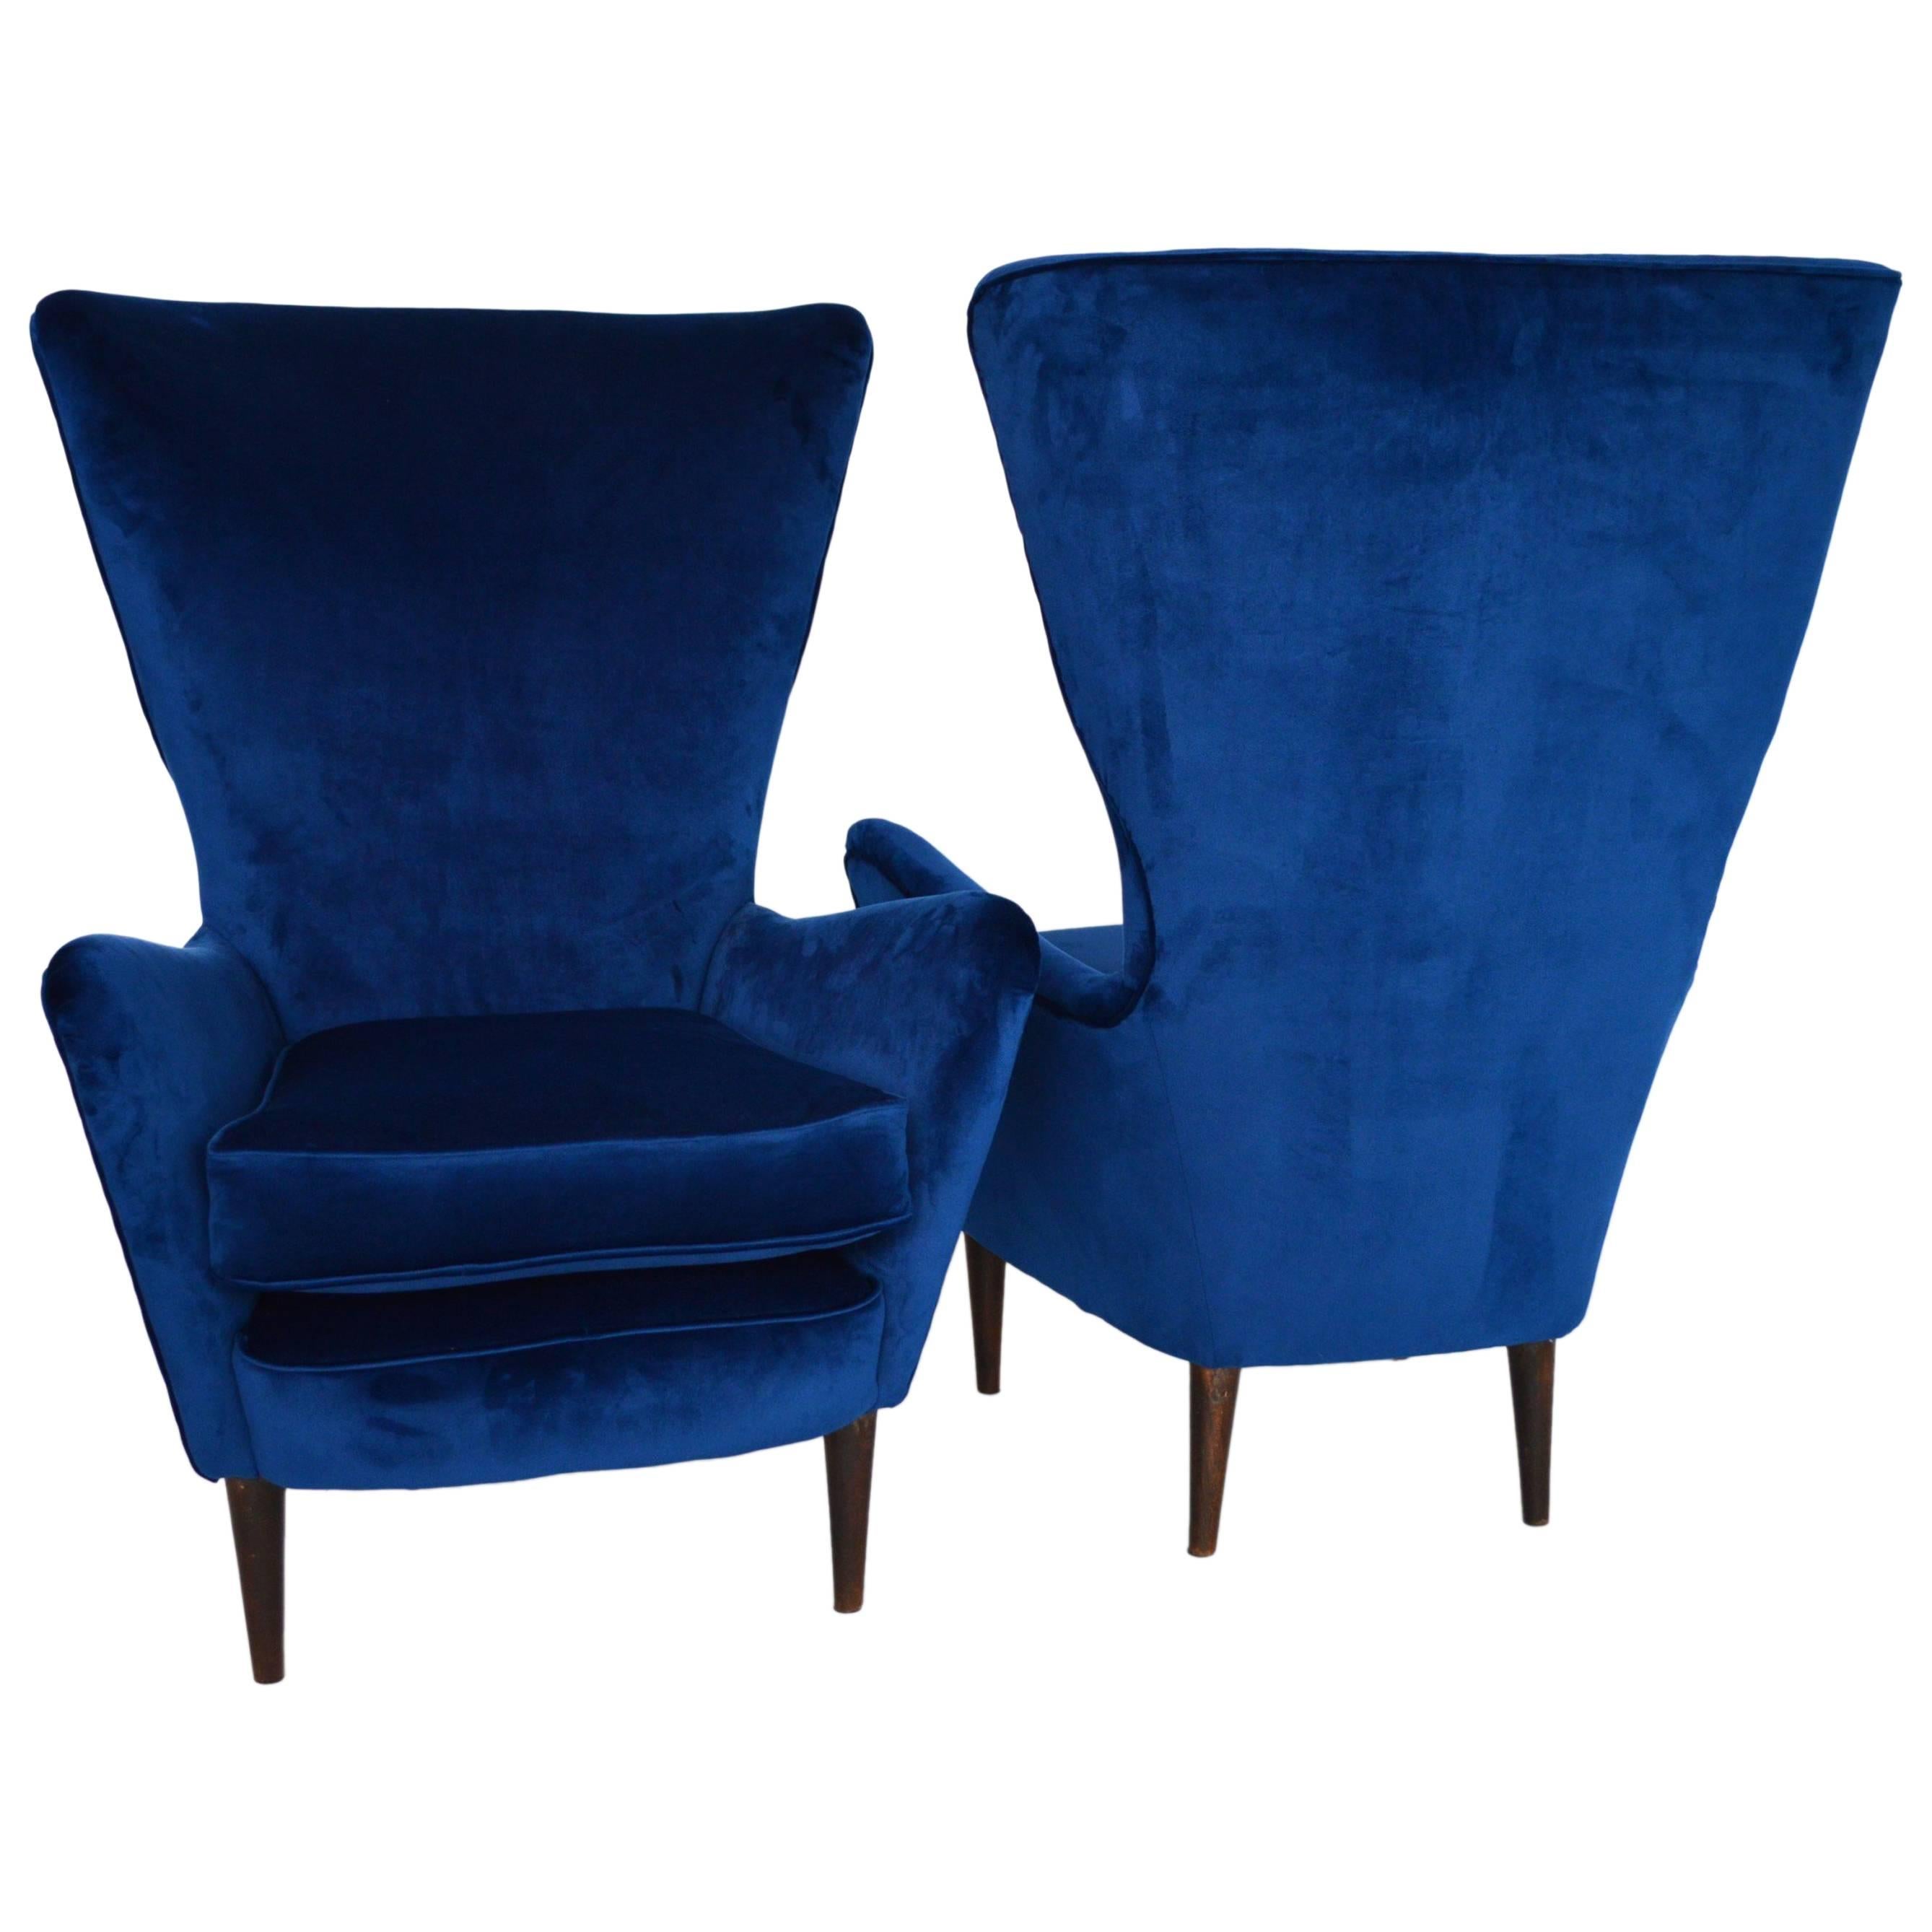 Italian Midcentury Armchairs Restored with Royal-Blue Velvet, 1950s